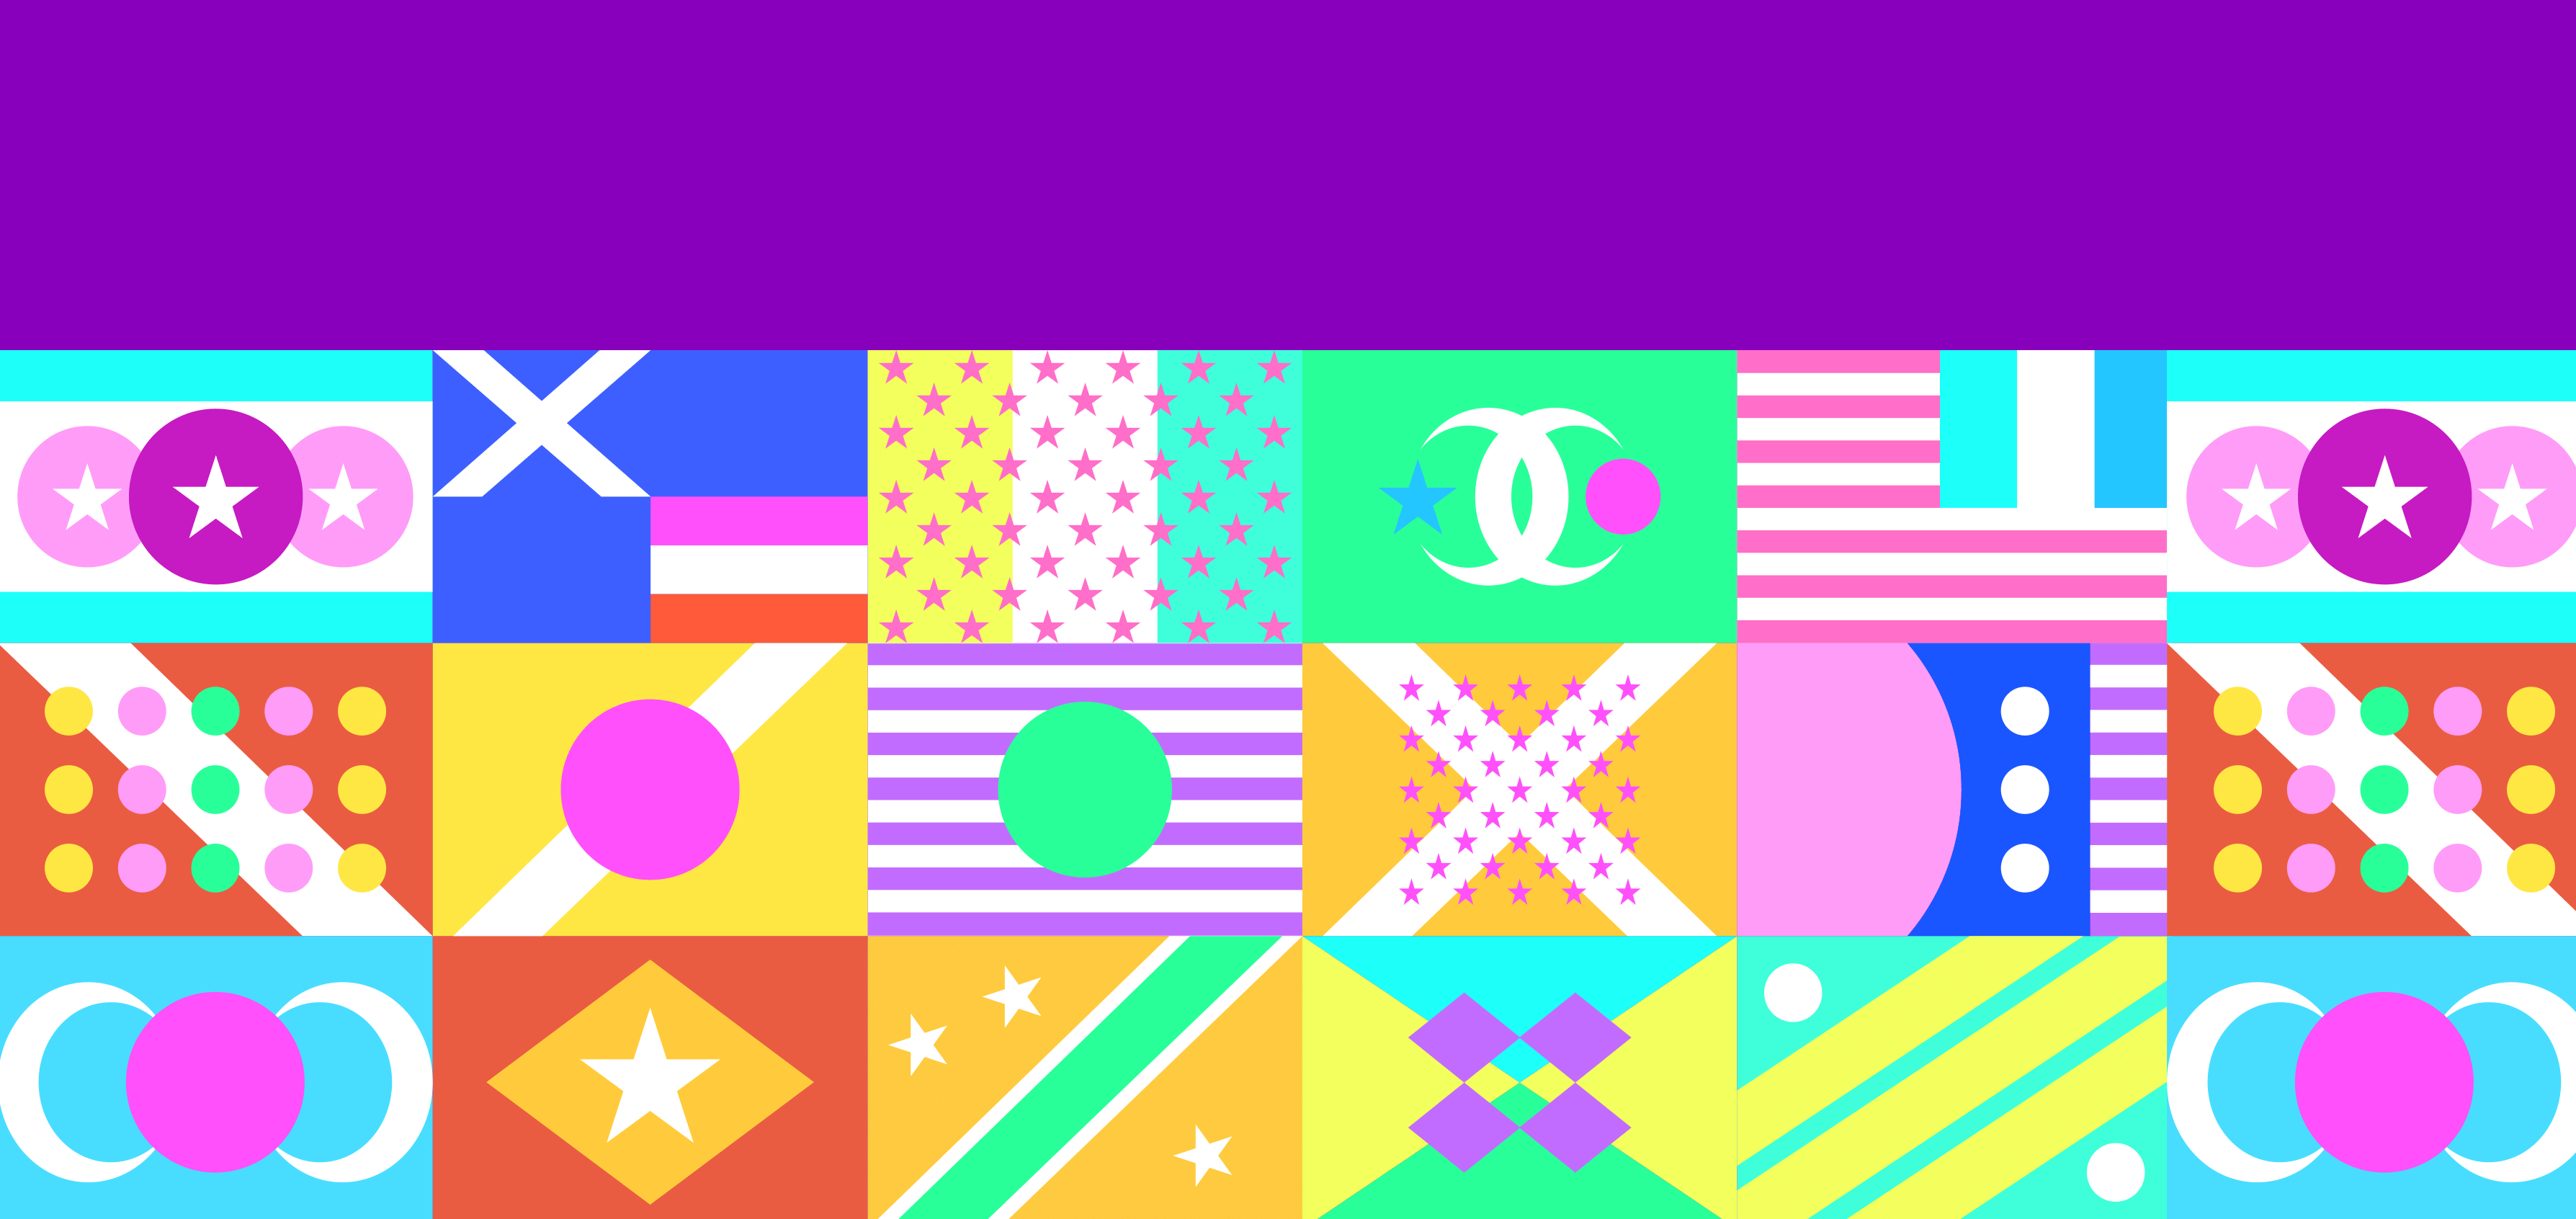 VAvoomvoom fantasy flag design